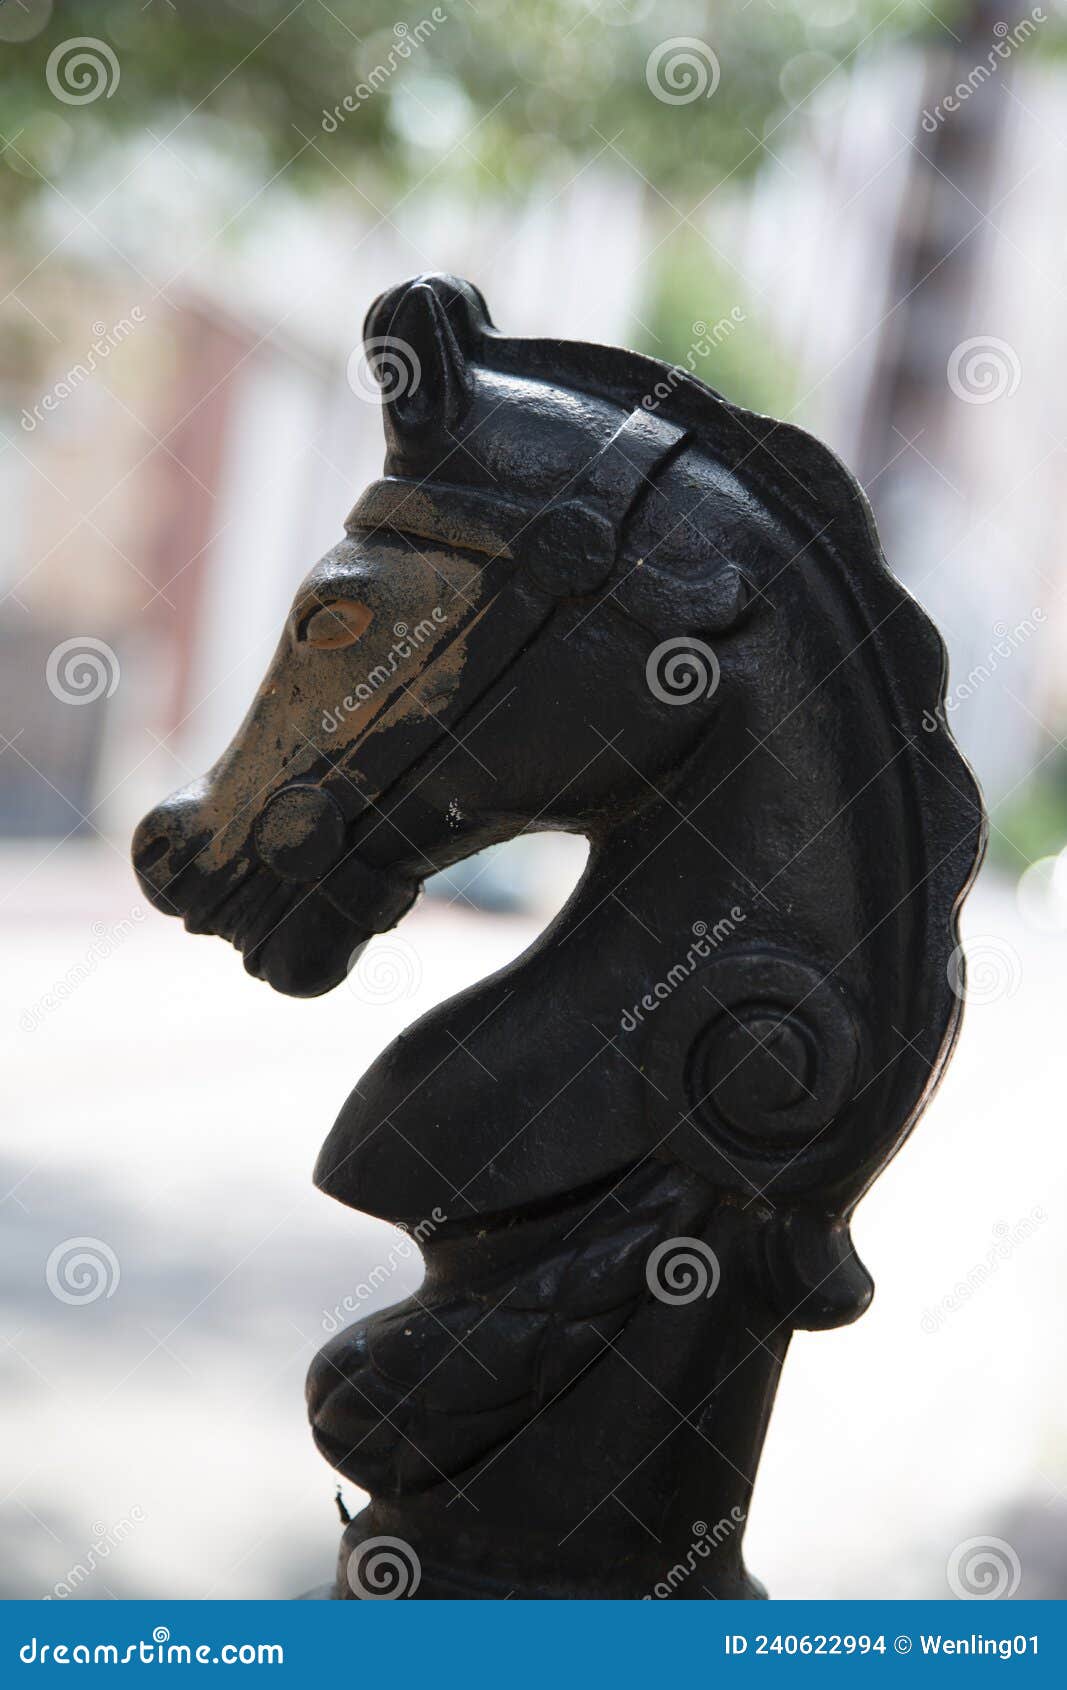 horse head model city new orleans usa